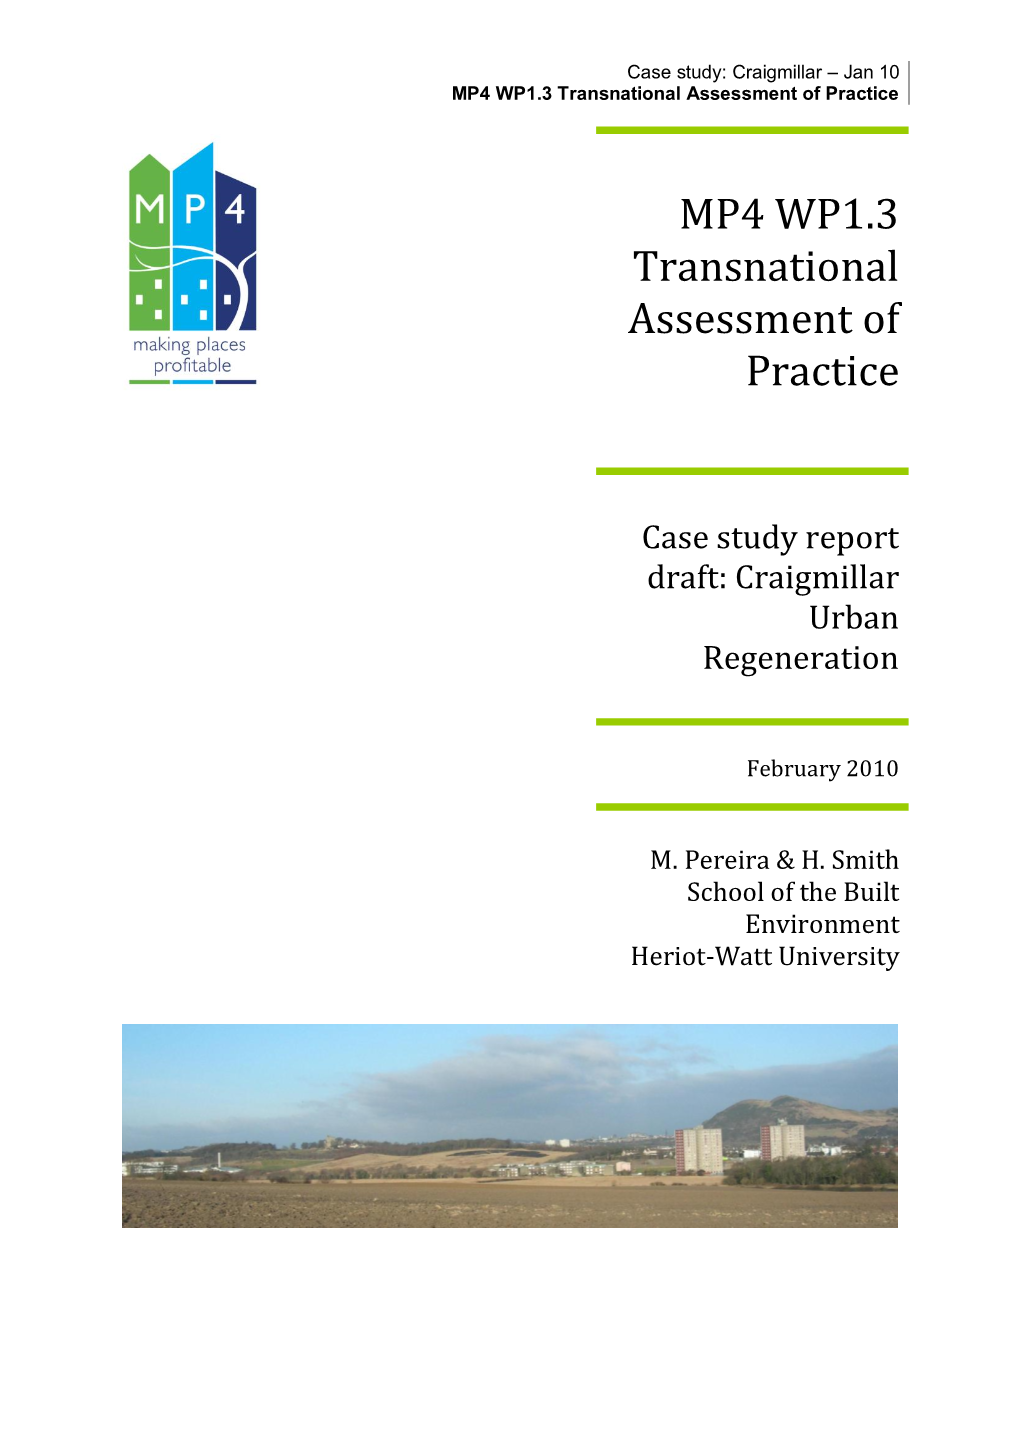 Craigmillar – Jan 10 MP4 WP1.3 Transnational Assessment of Practice